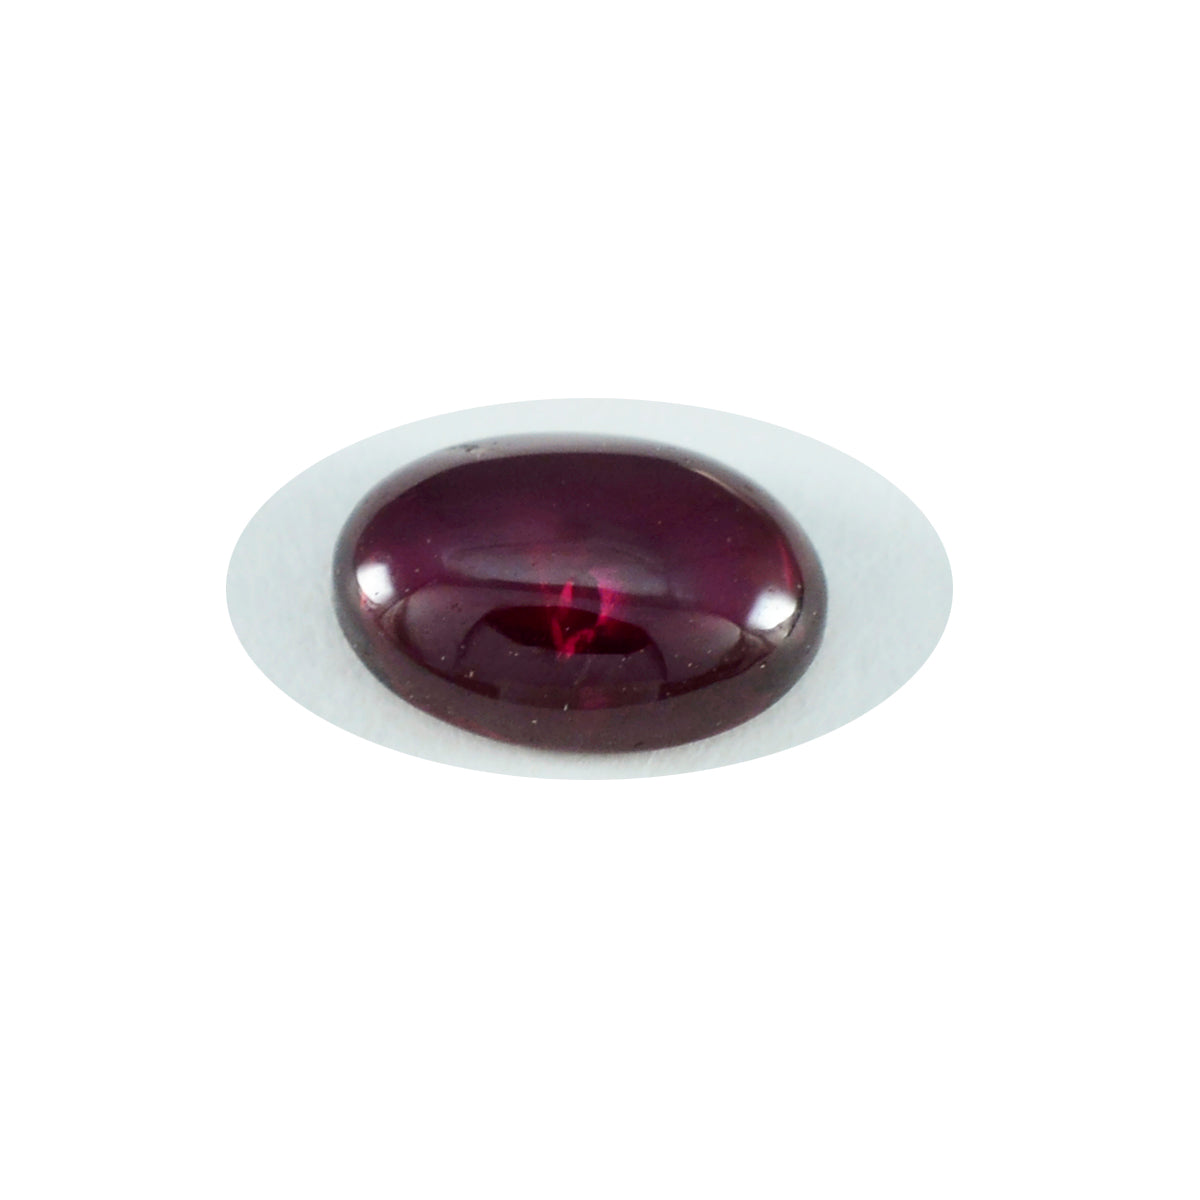 Riyogems 1PC Red Garnet Cabochon 9x11 mm Oval Shape excellent Quality Gems